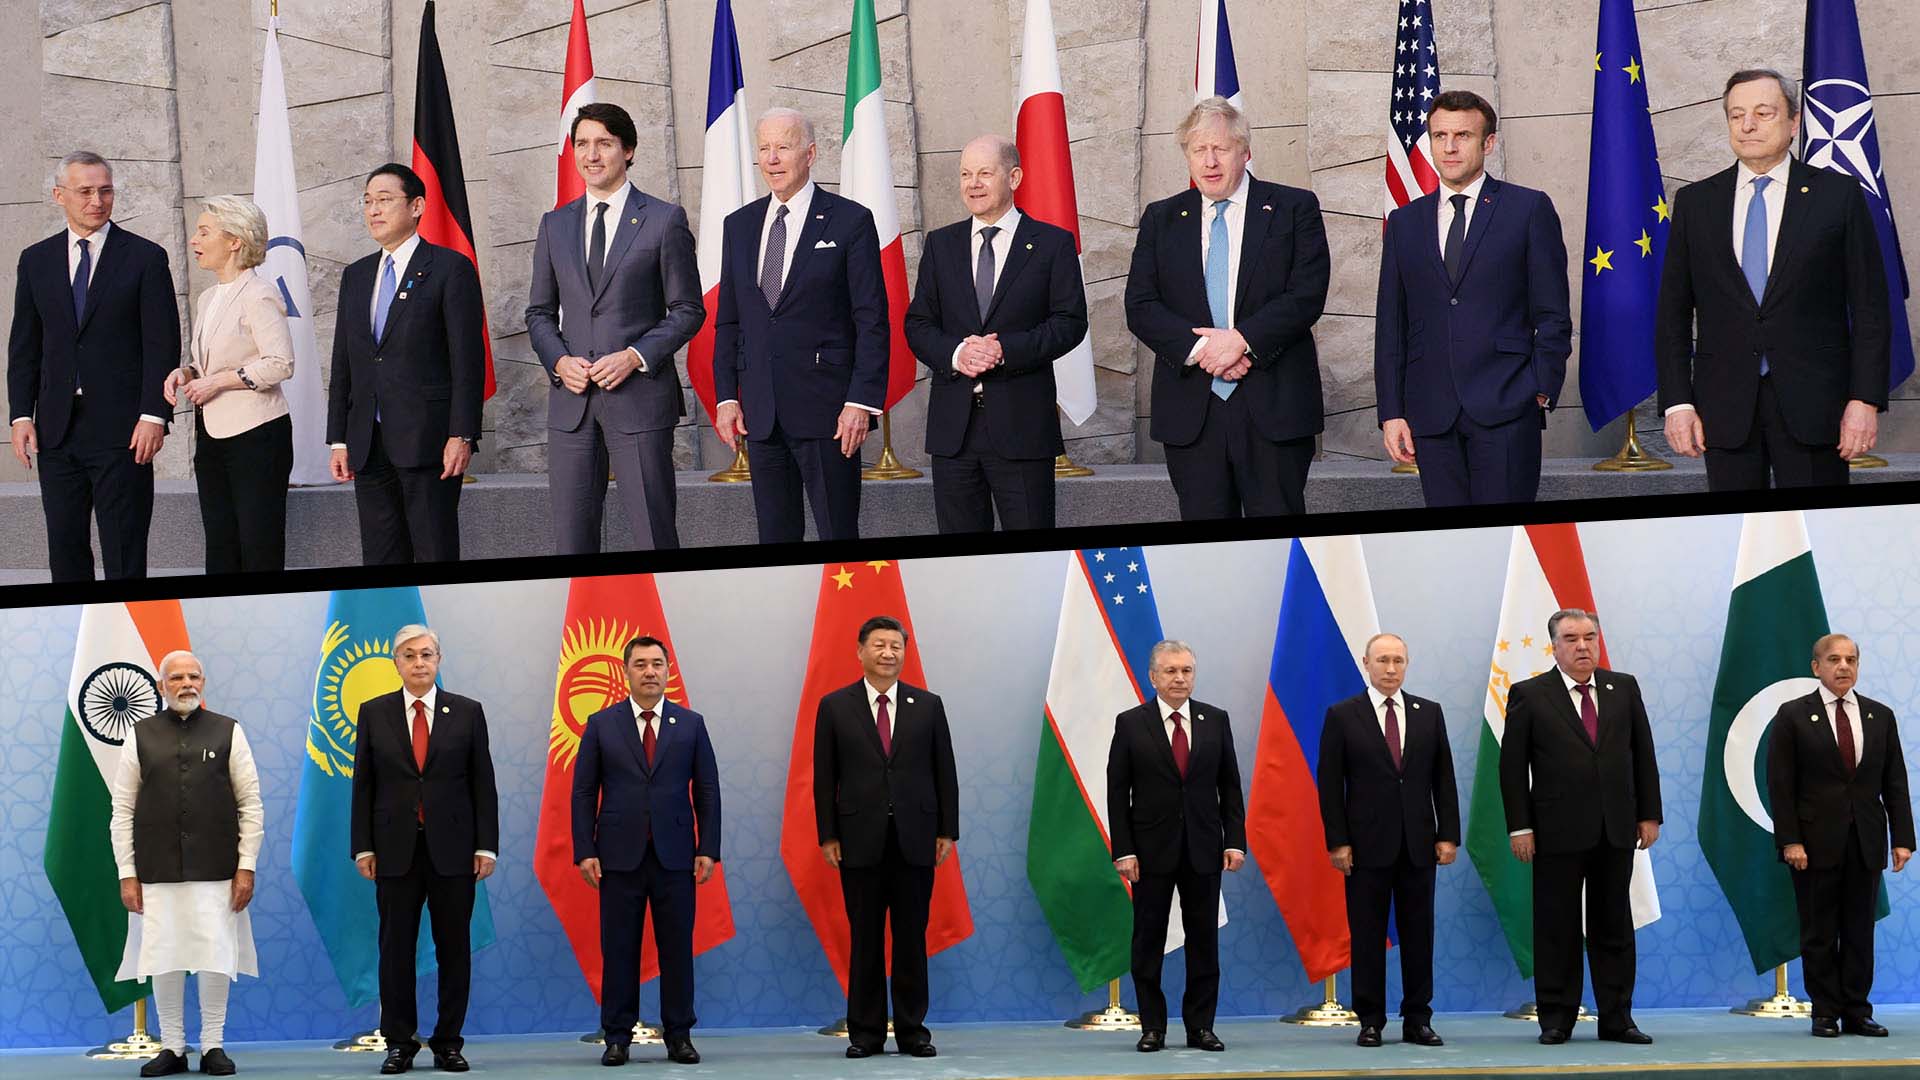 G7 NATO EU Shanghai Cooperation Org West Global South